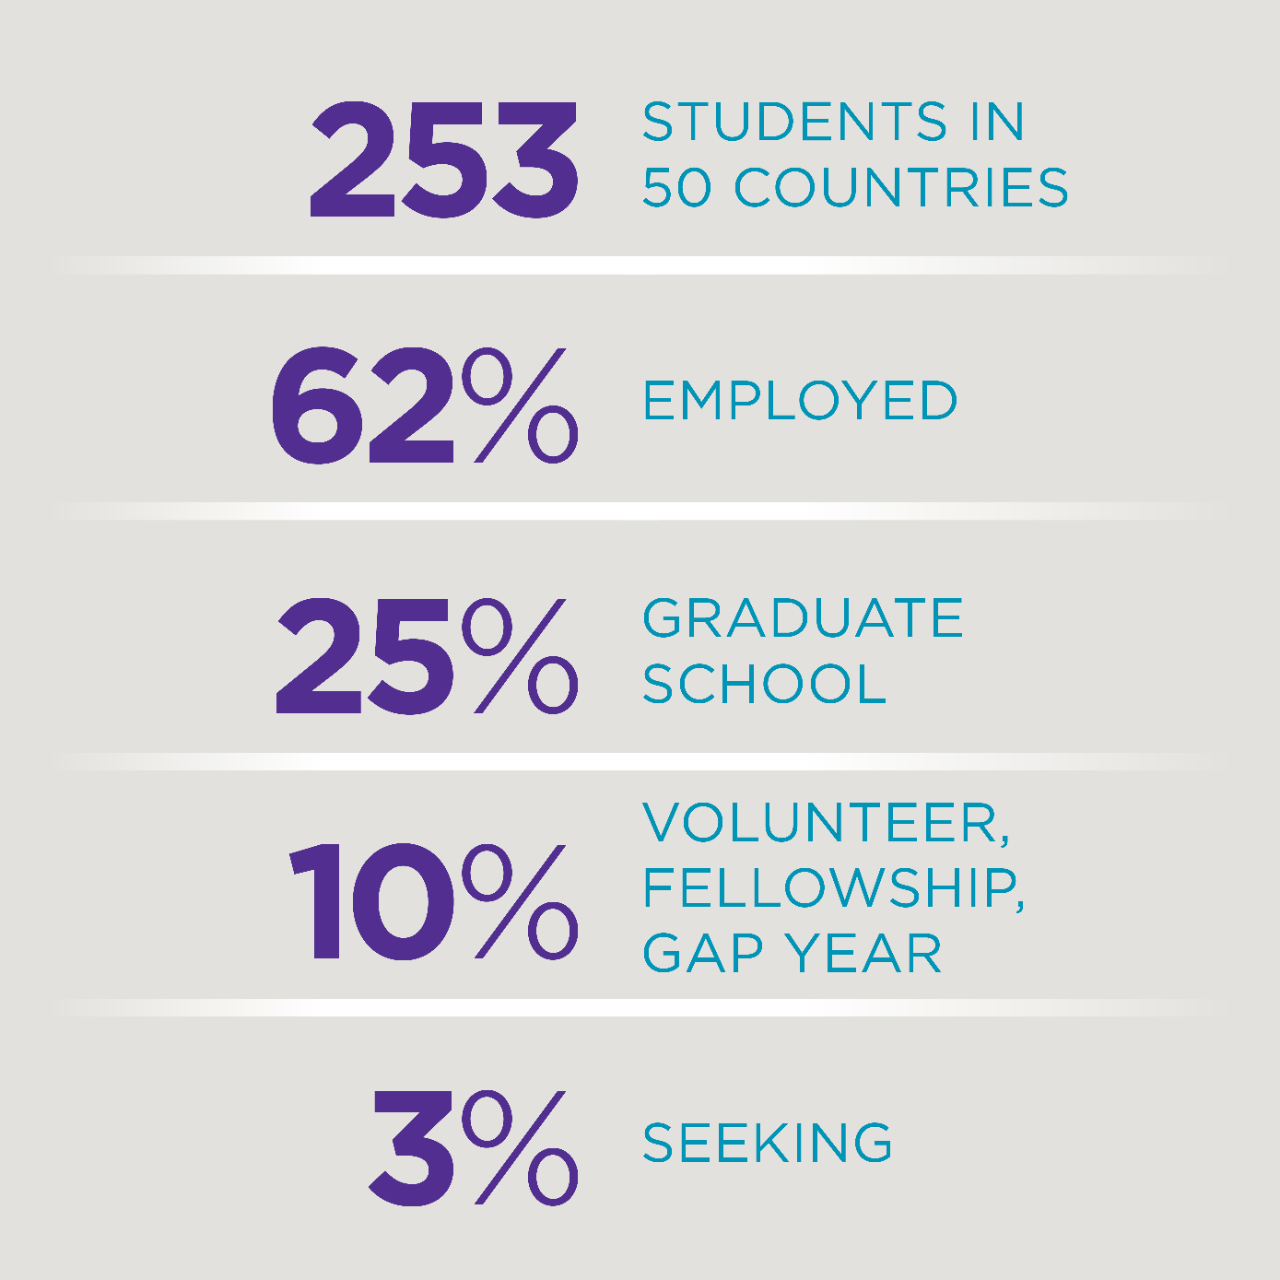 253 - students in 50 countries; 62% employed; 25% graduate school; 10% volunteer, fellowship, gap year; 3% seeking.